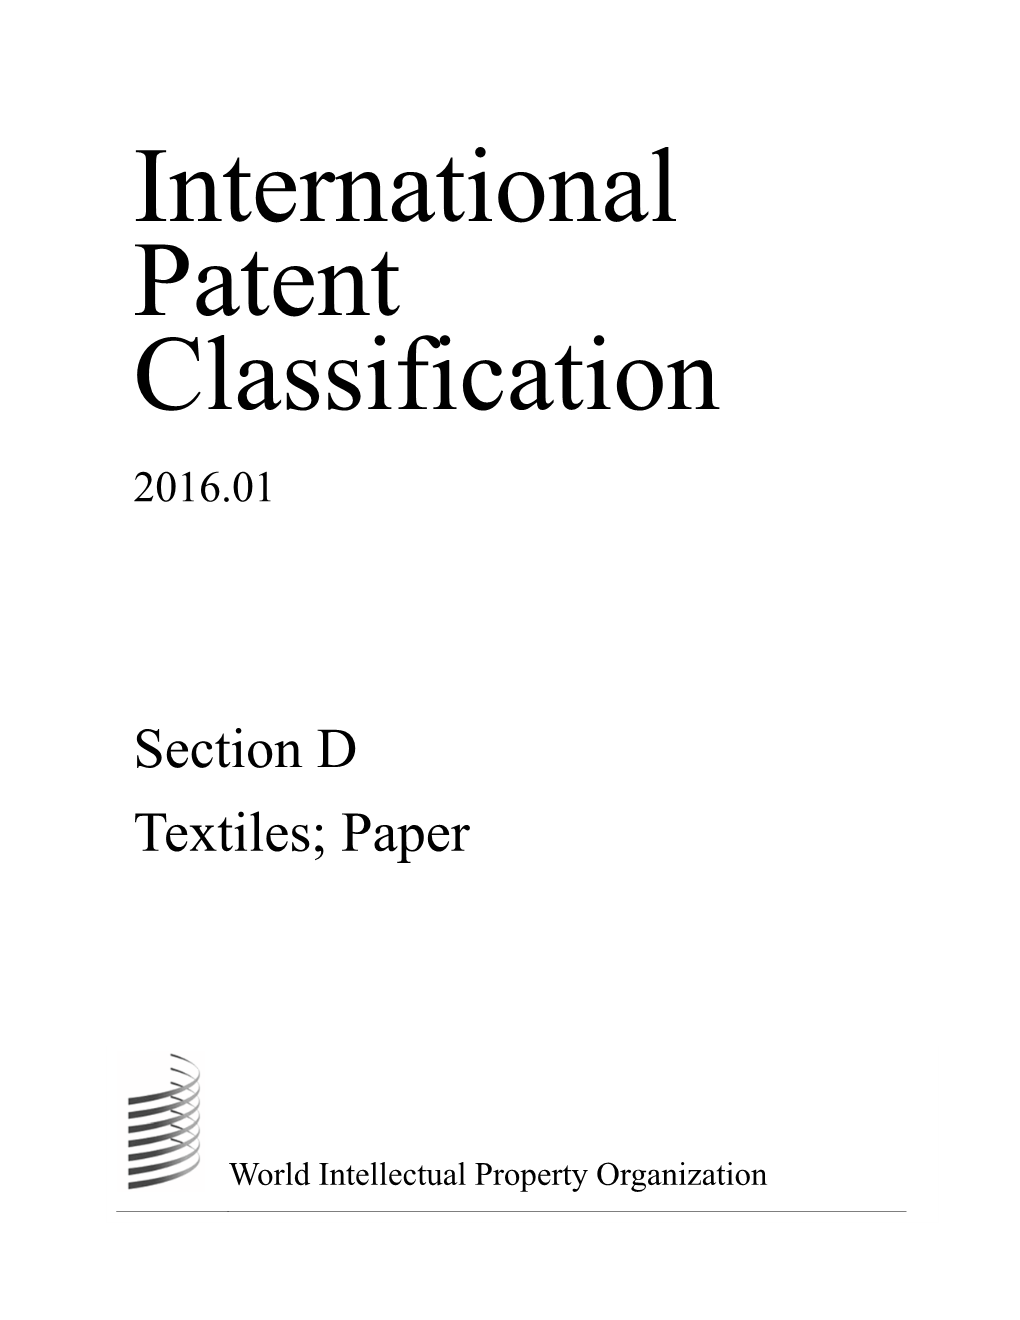 International Patent Classification